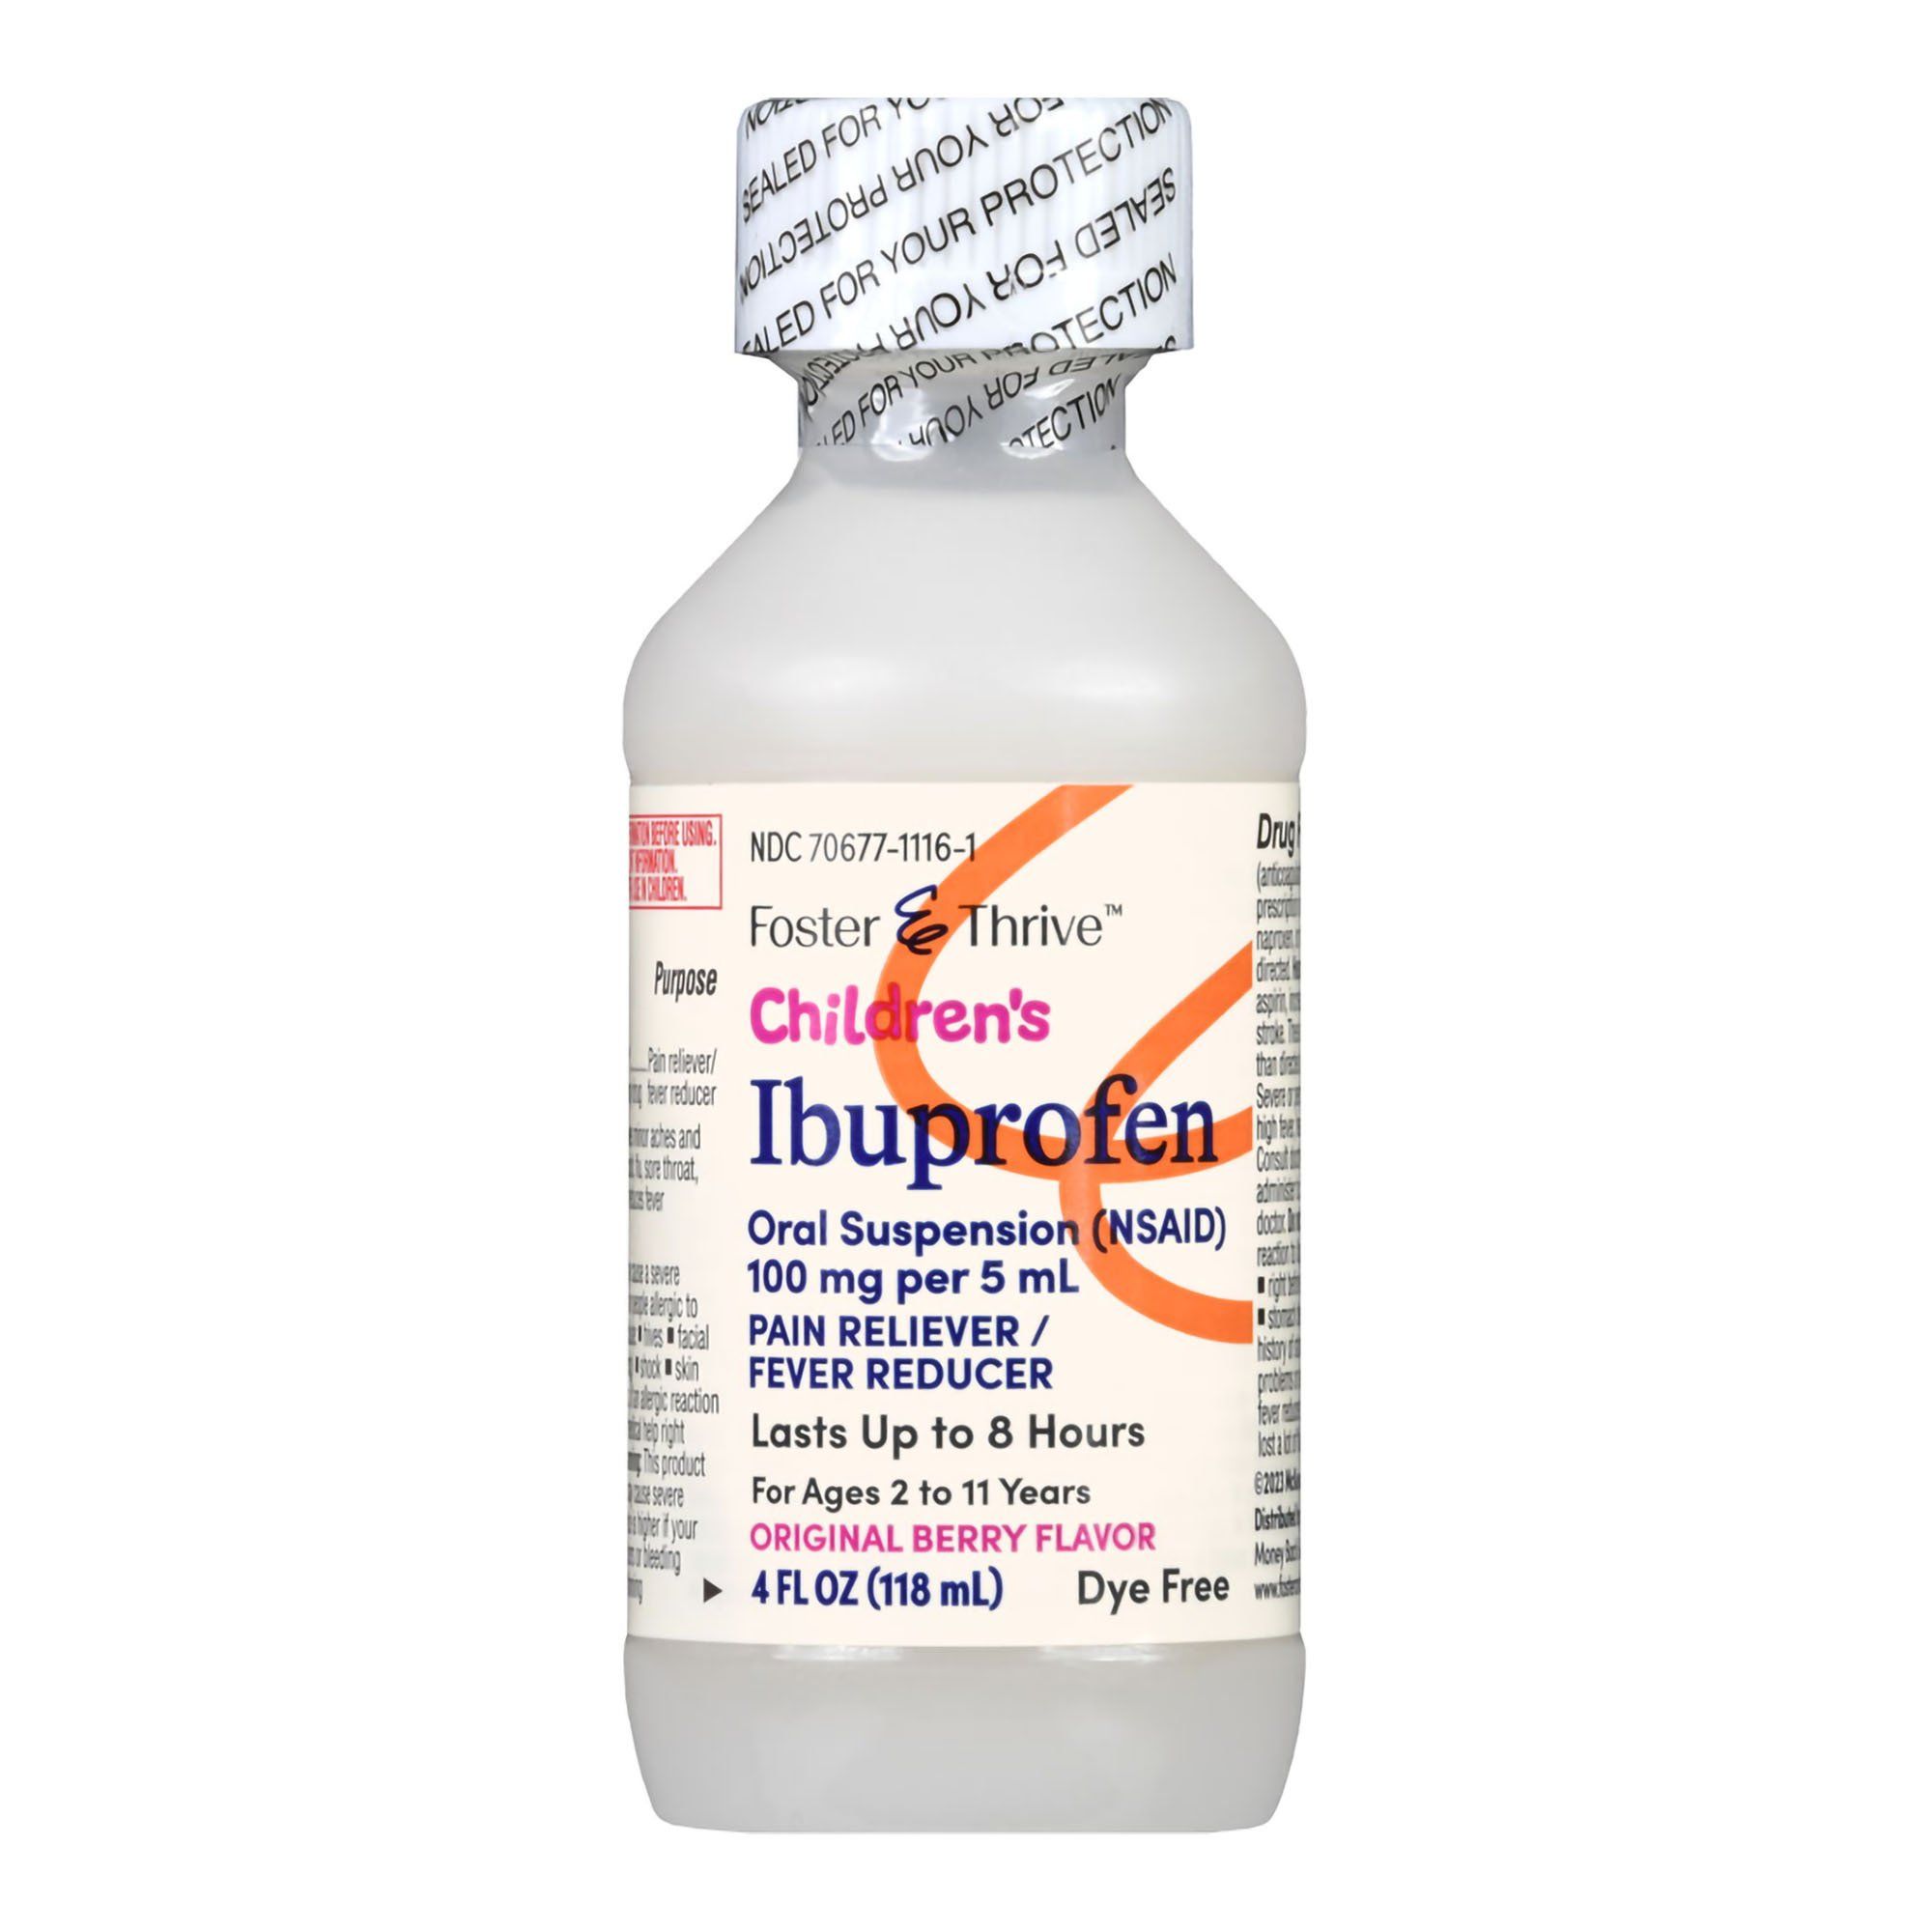 Foster & Thrive Children's Ibuprofen 100 mg, Dye Free, Original Berry - 4 fl oz